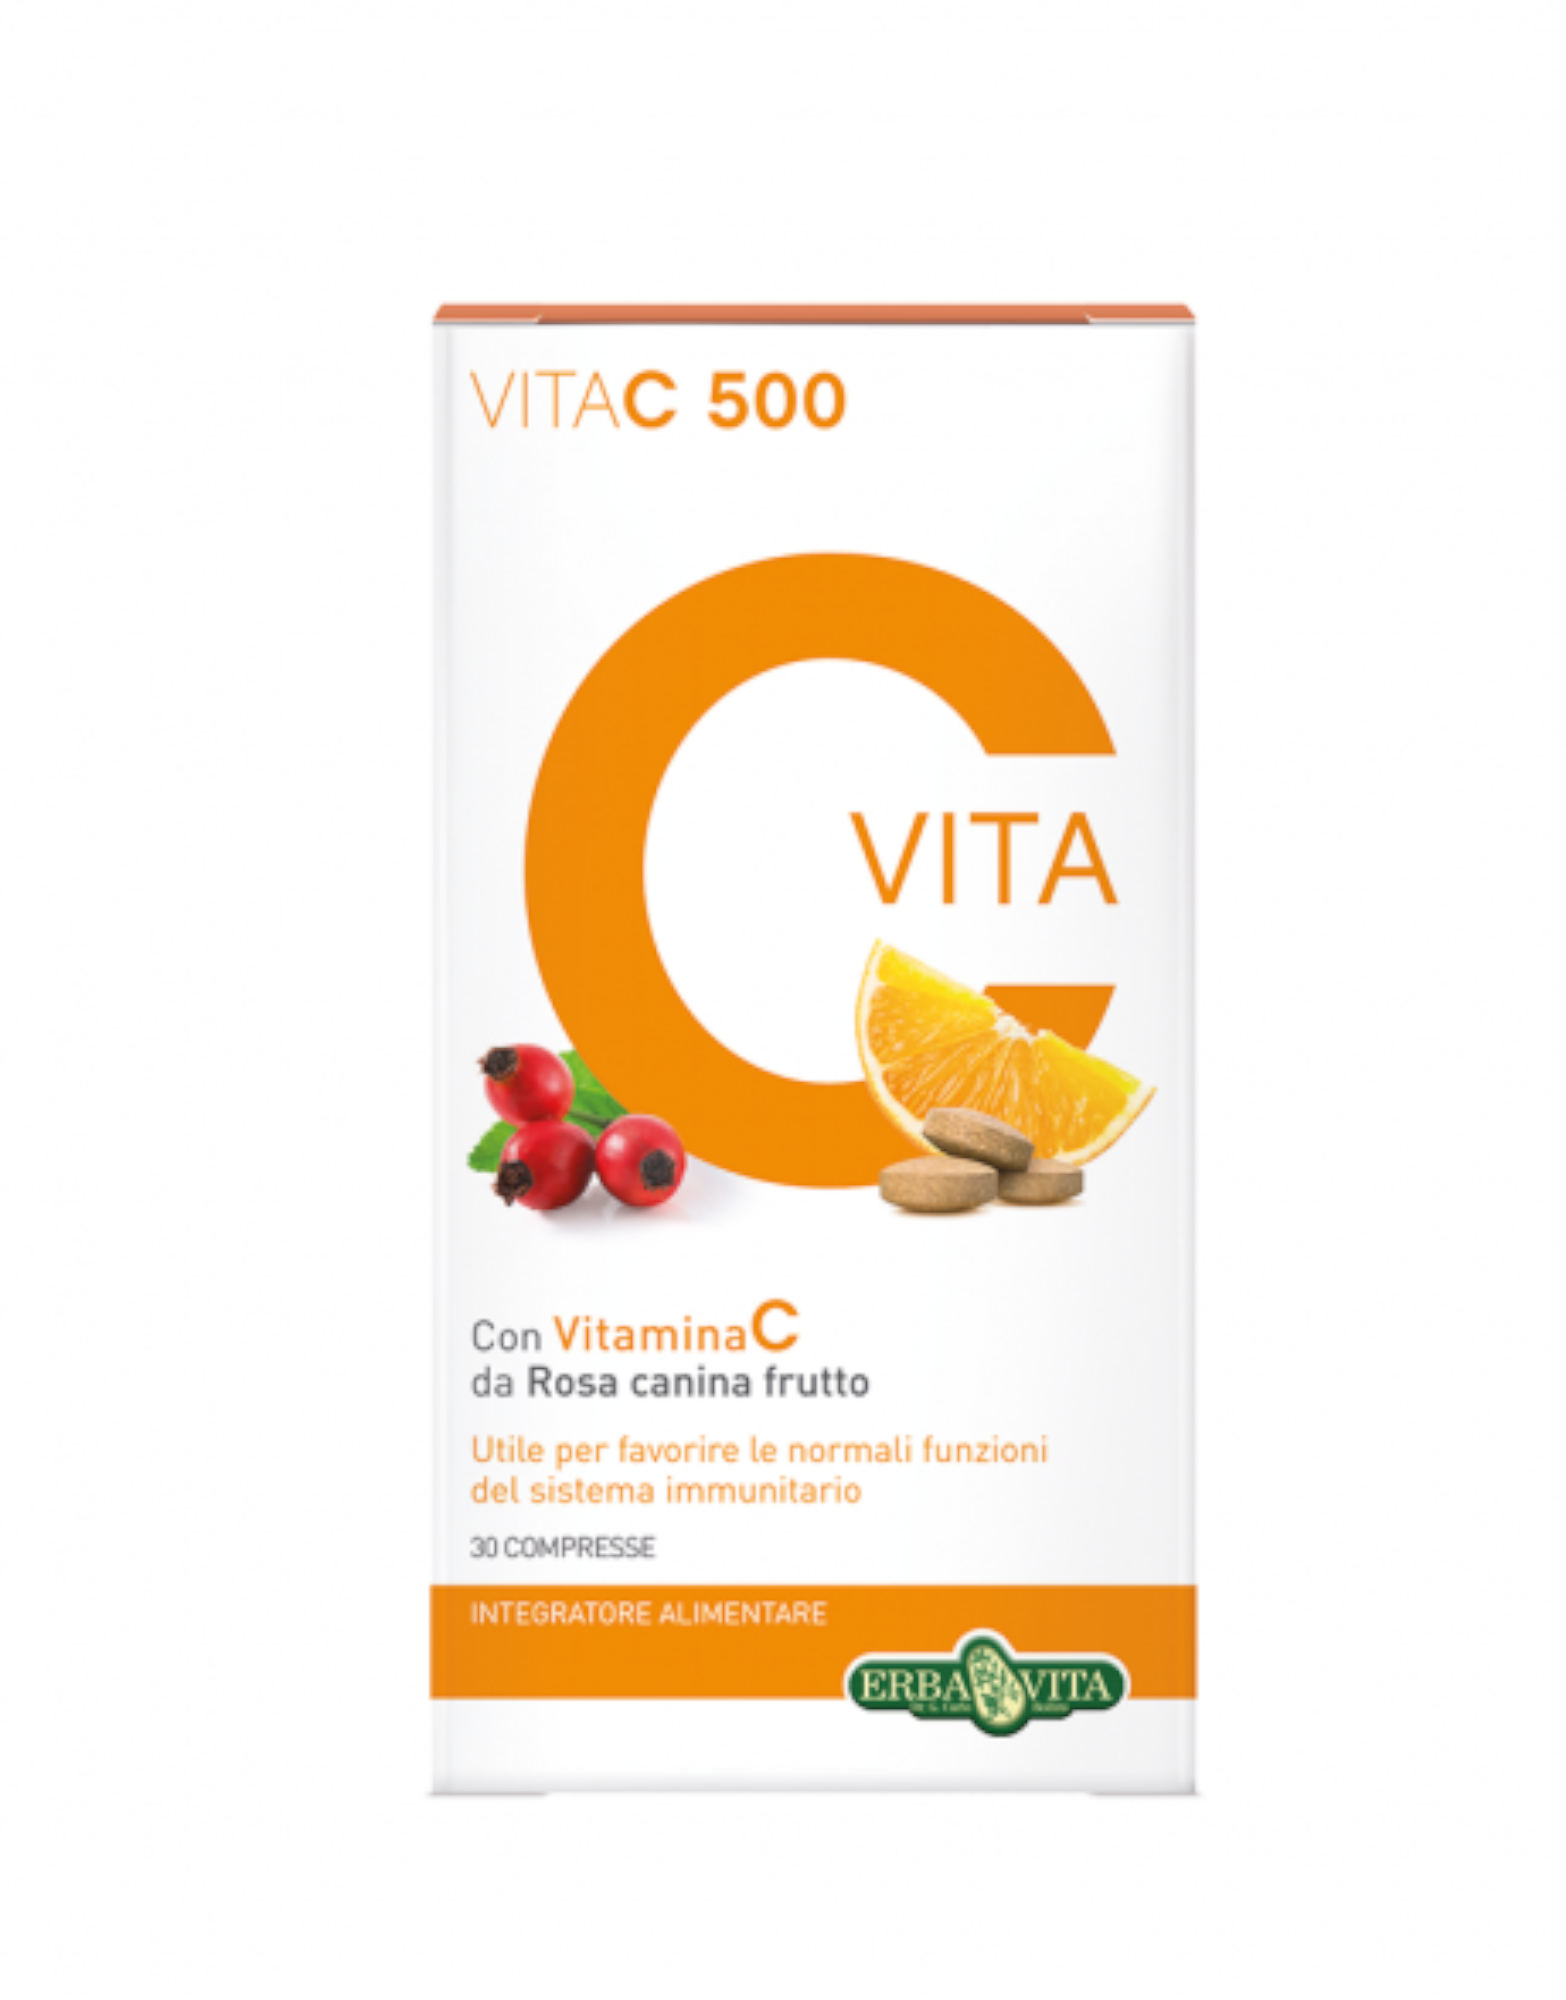 Vita C 500 by ERBA VITA (30 tablets)